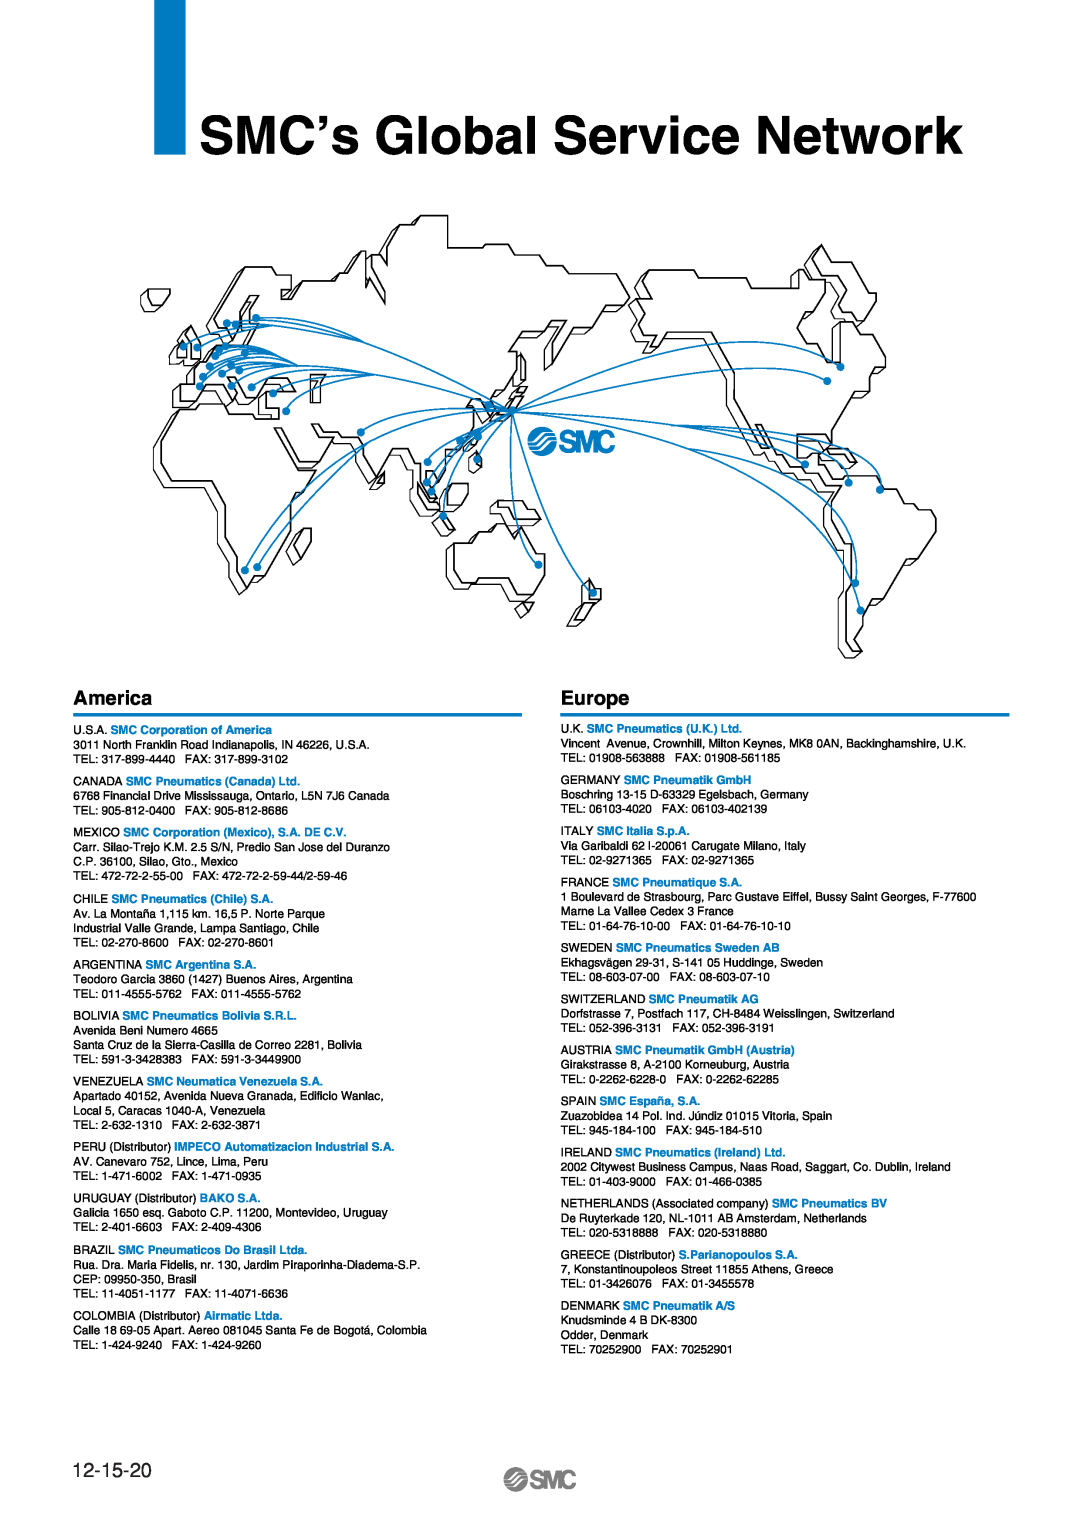 SMC Networks MHT2 manual SMC’s Global Service Network, America, Europe, 12-15-20 